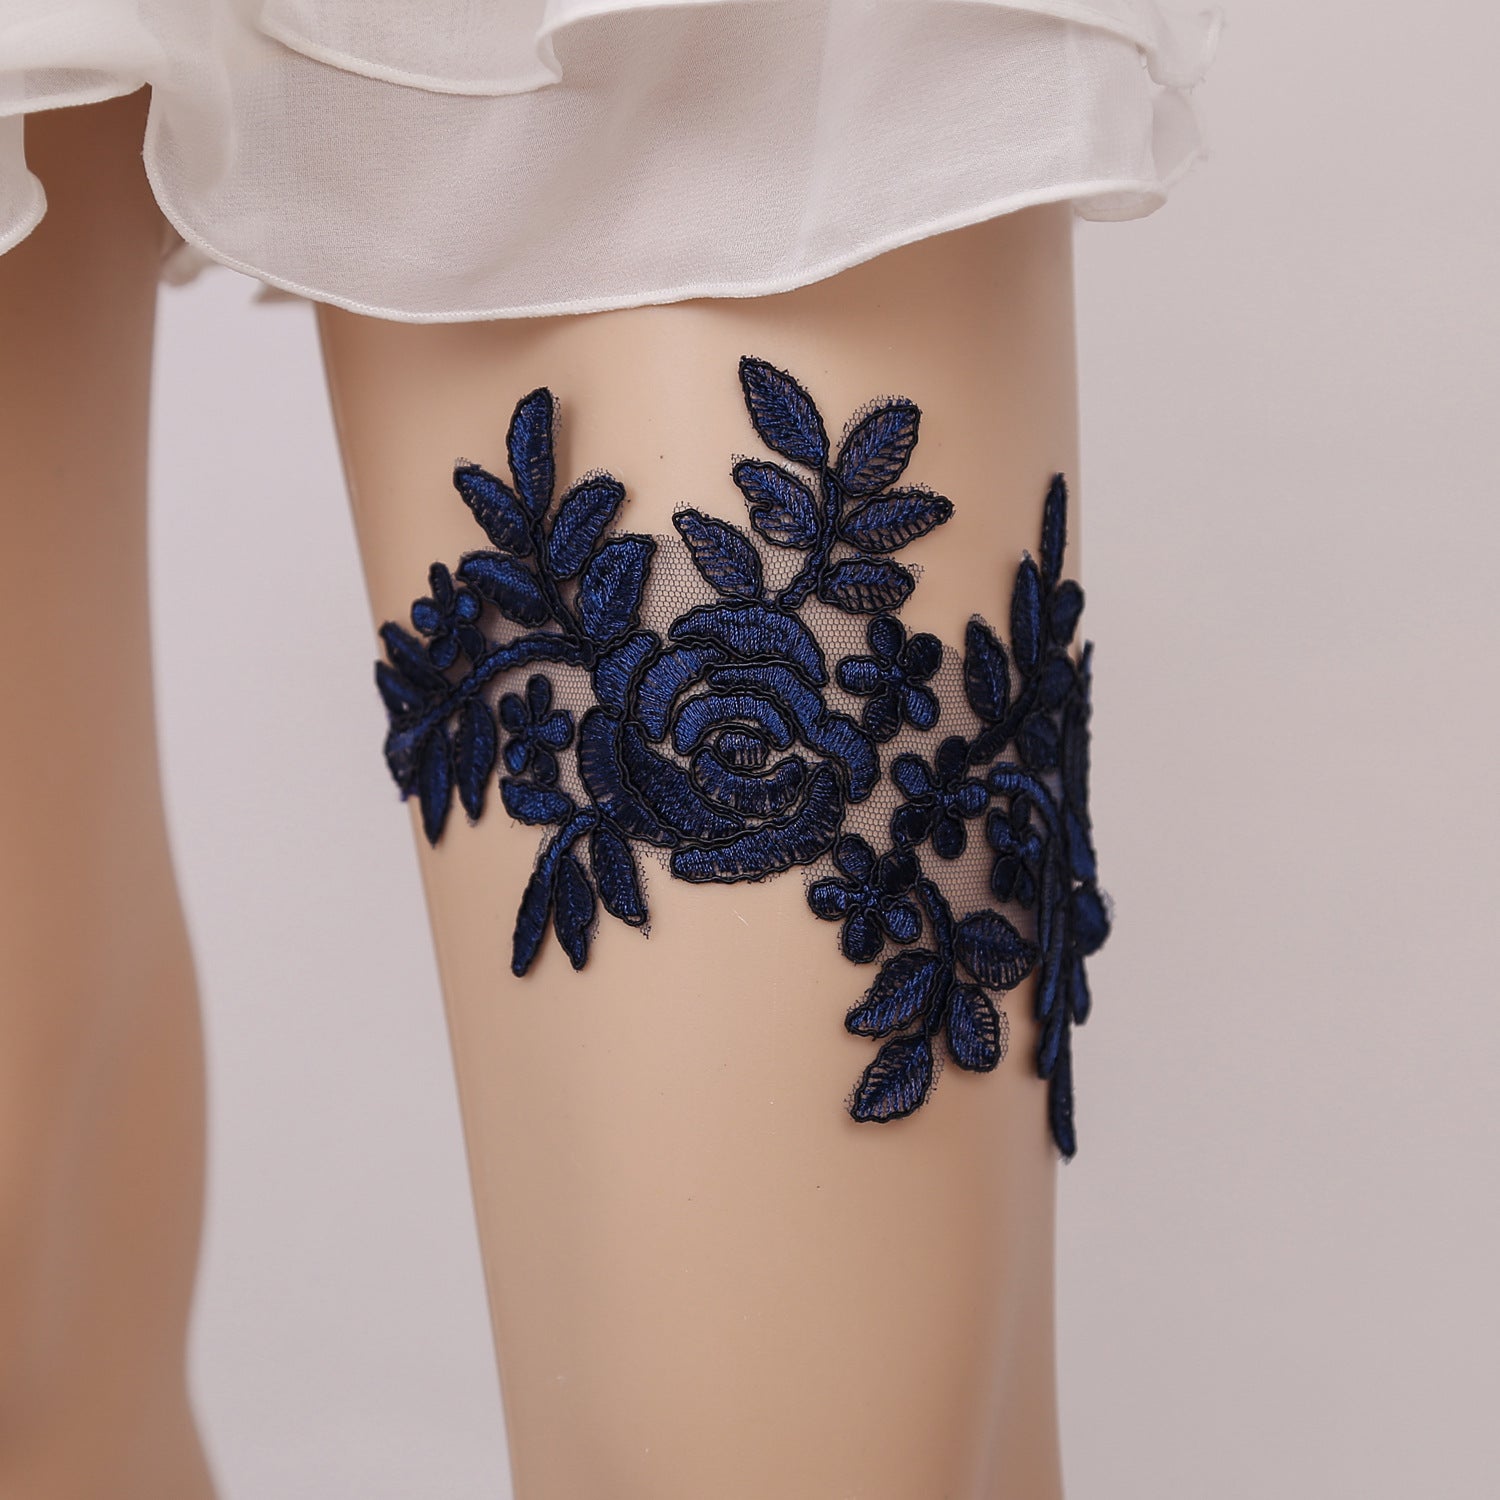 Bridal Garter wedding lace accessories